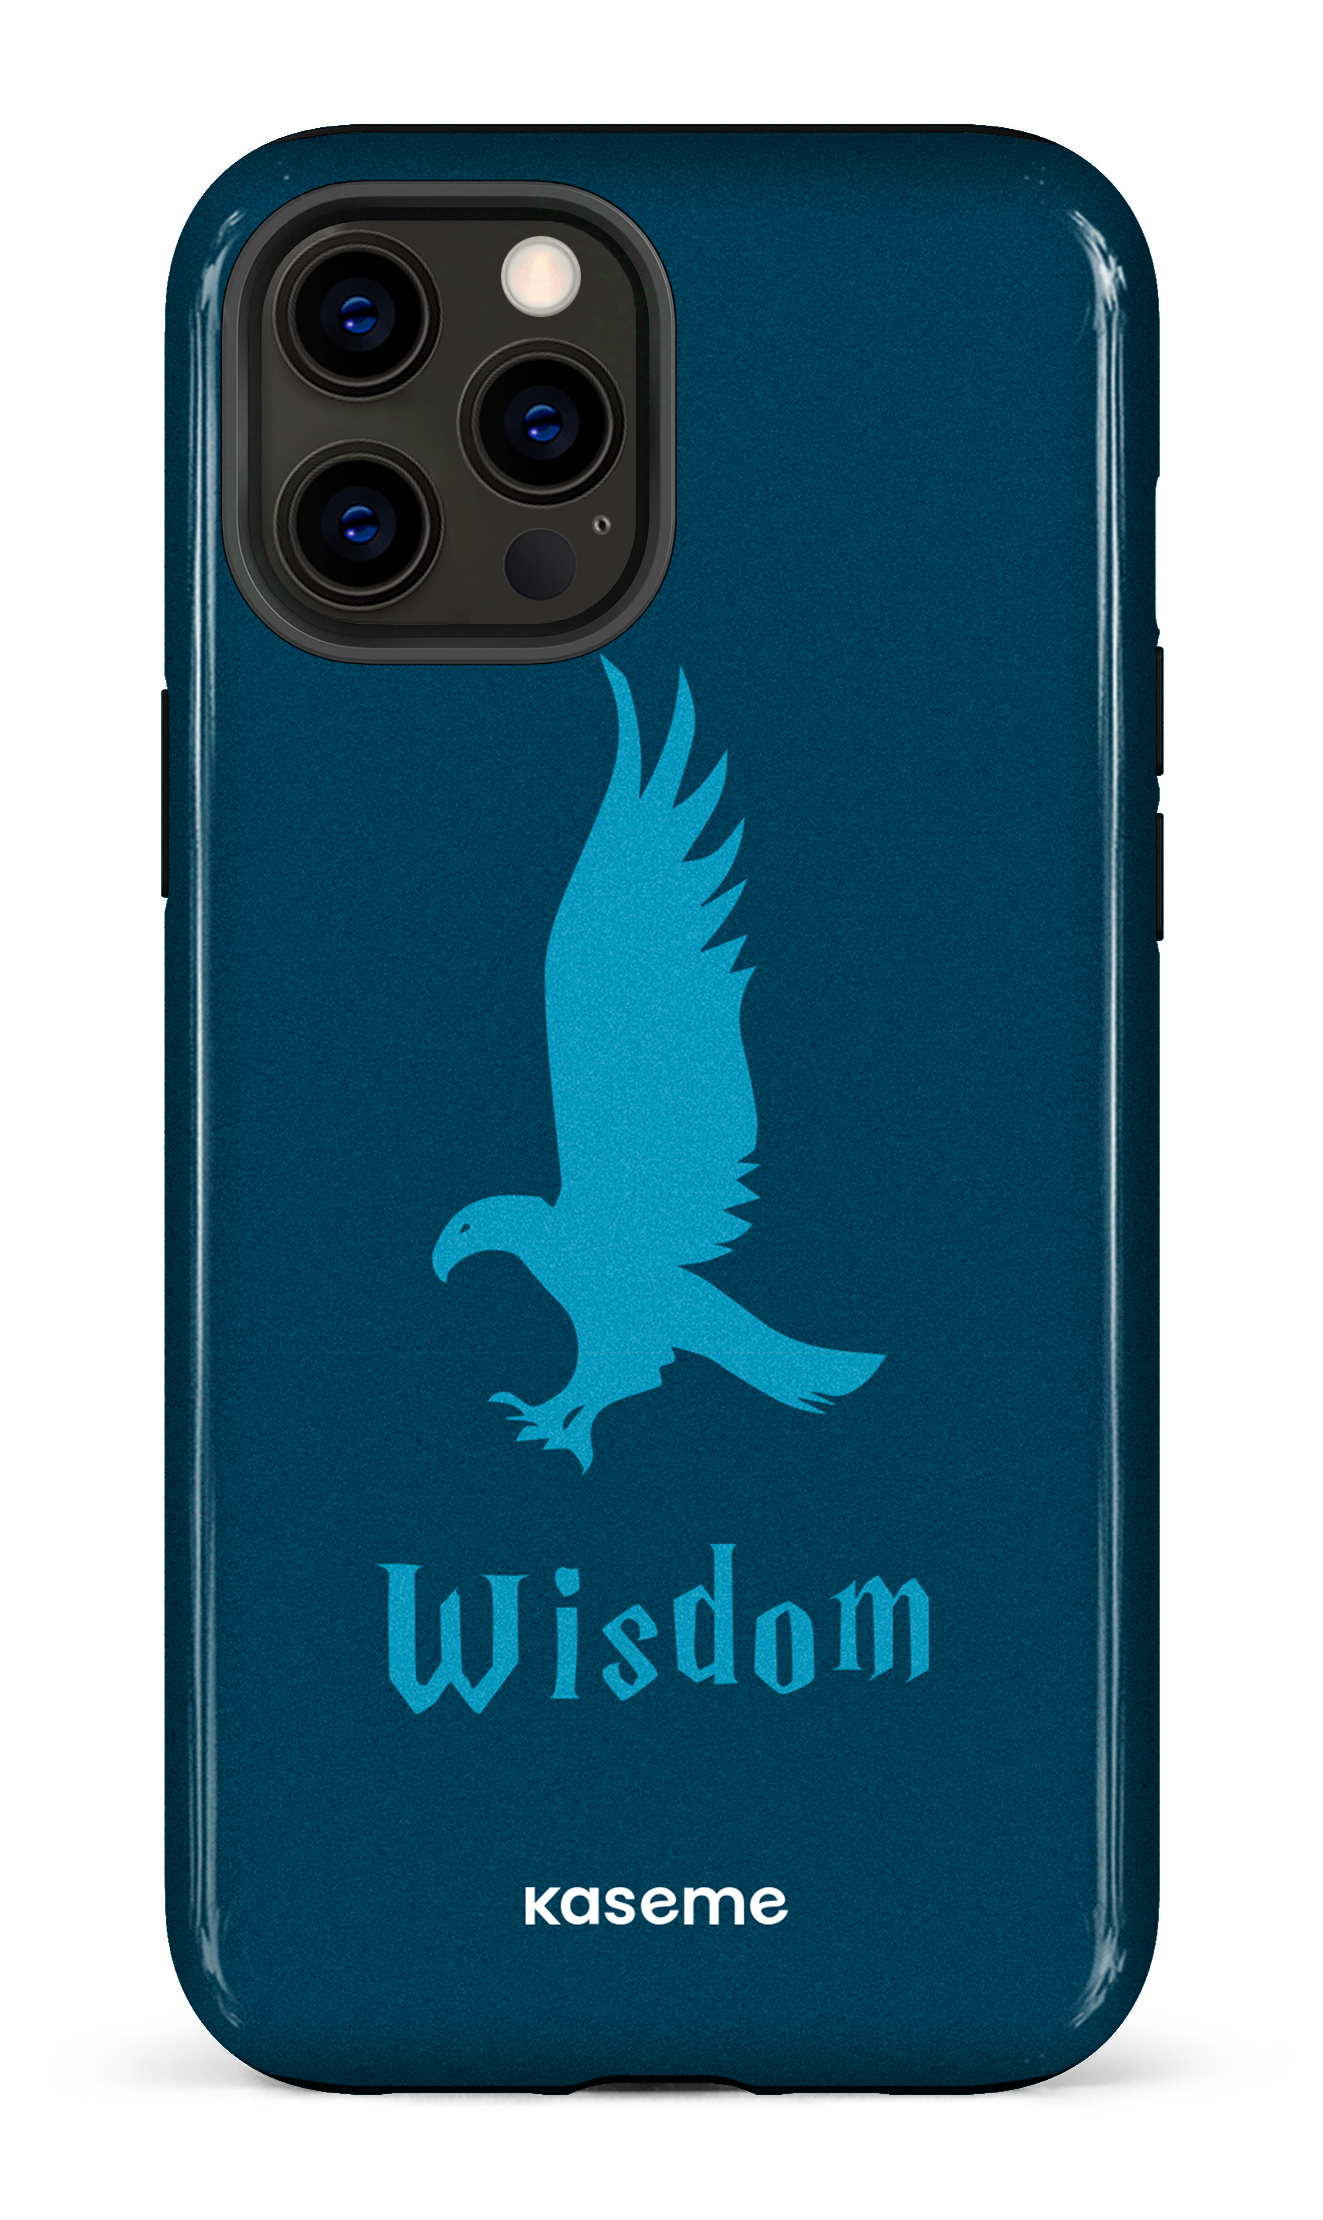 Wisdom - iPhone 12 Pro Max